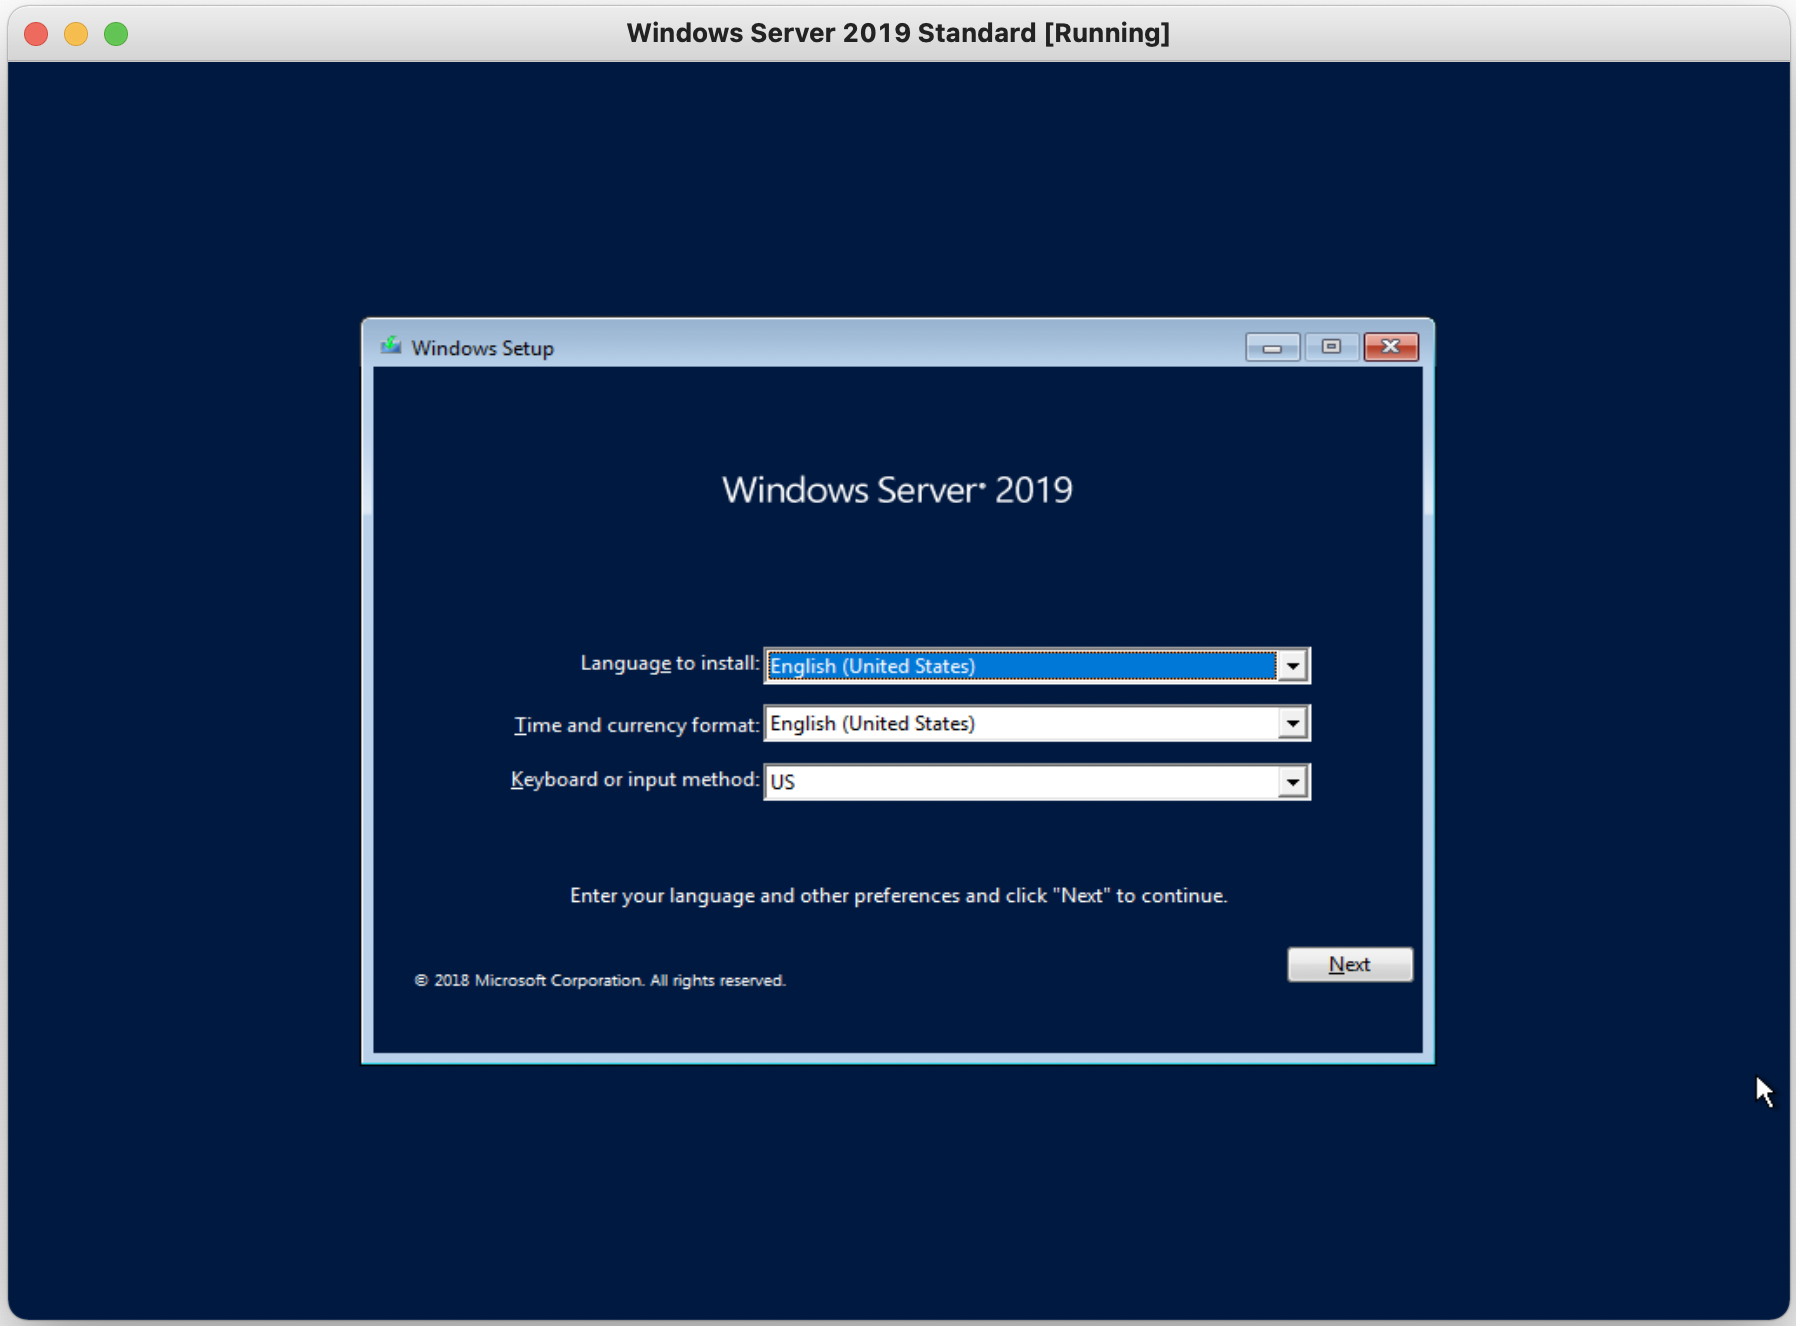 Windows language confirmation screen